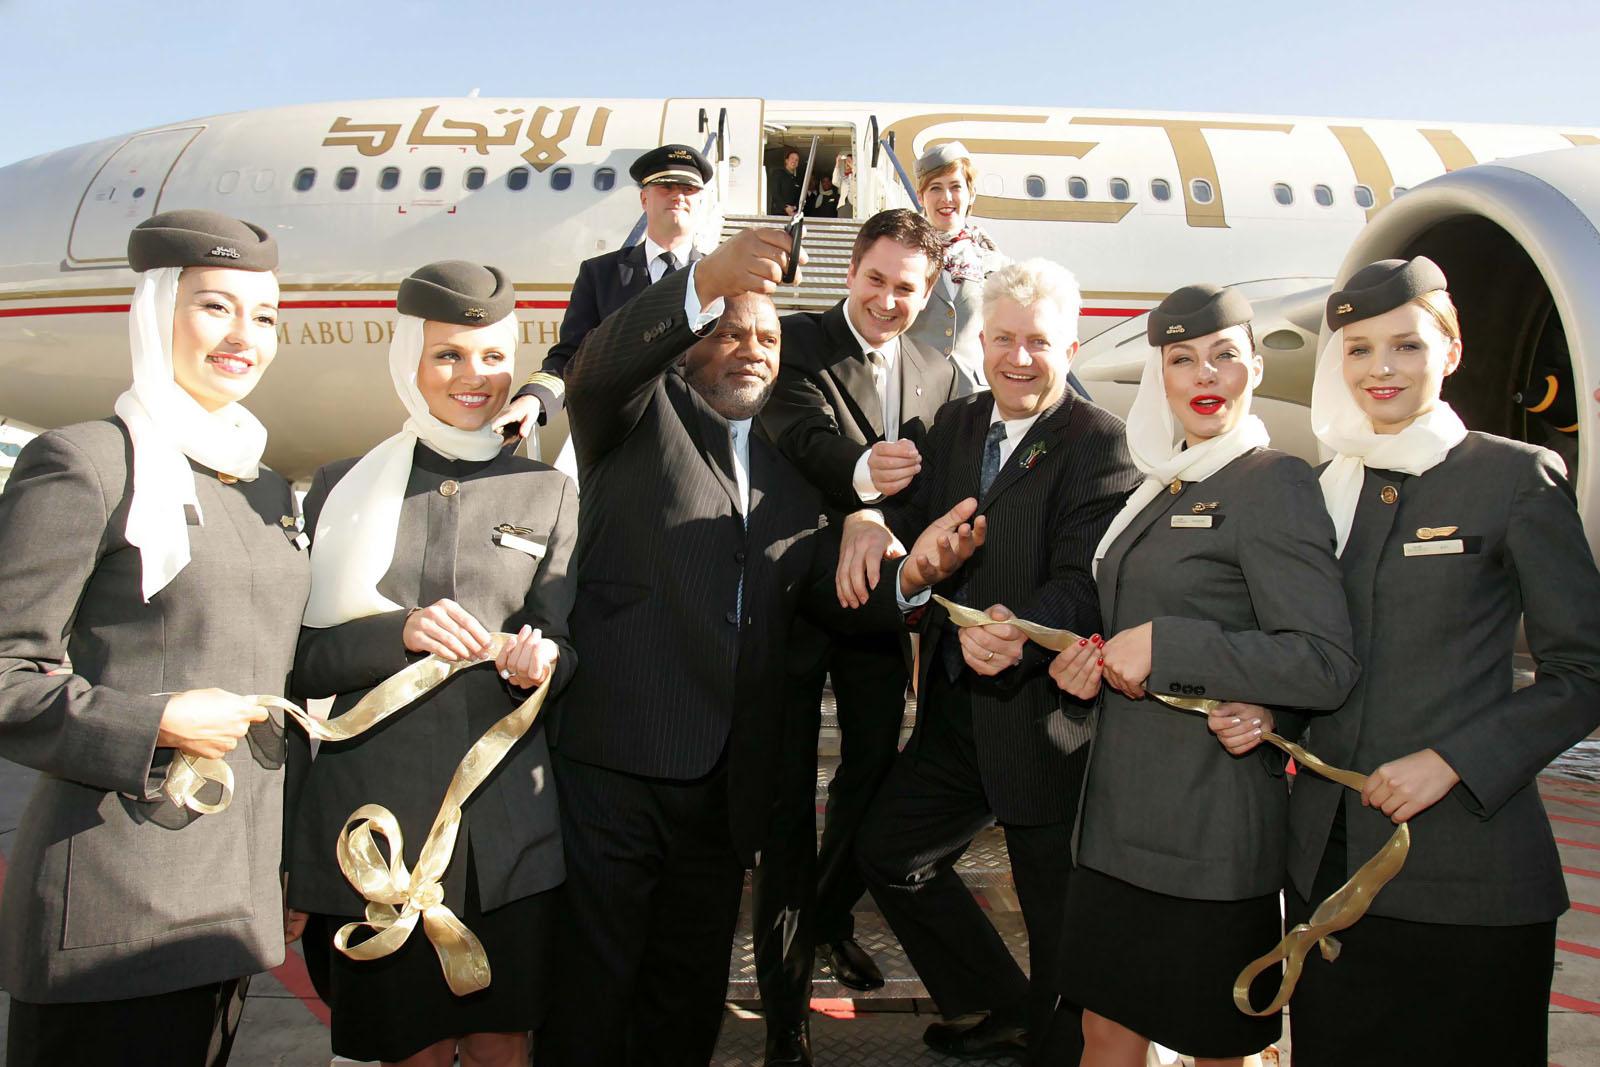 Etihad Airways Opens World Class Premium Lounge at LAX